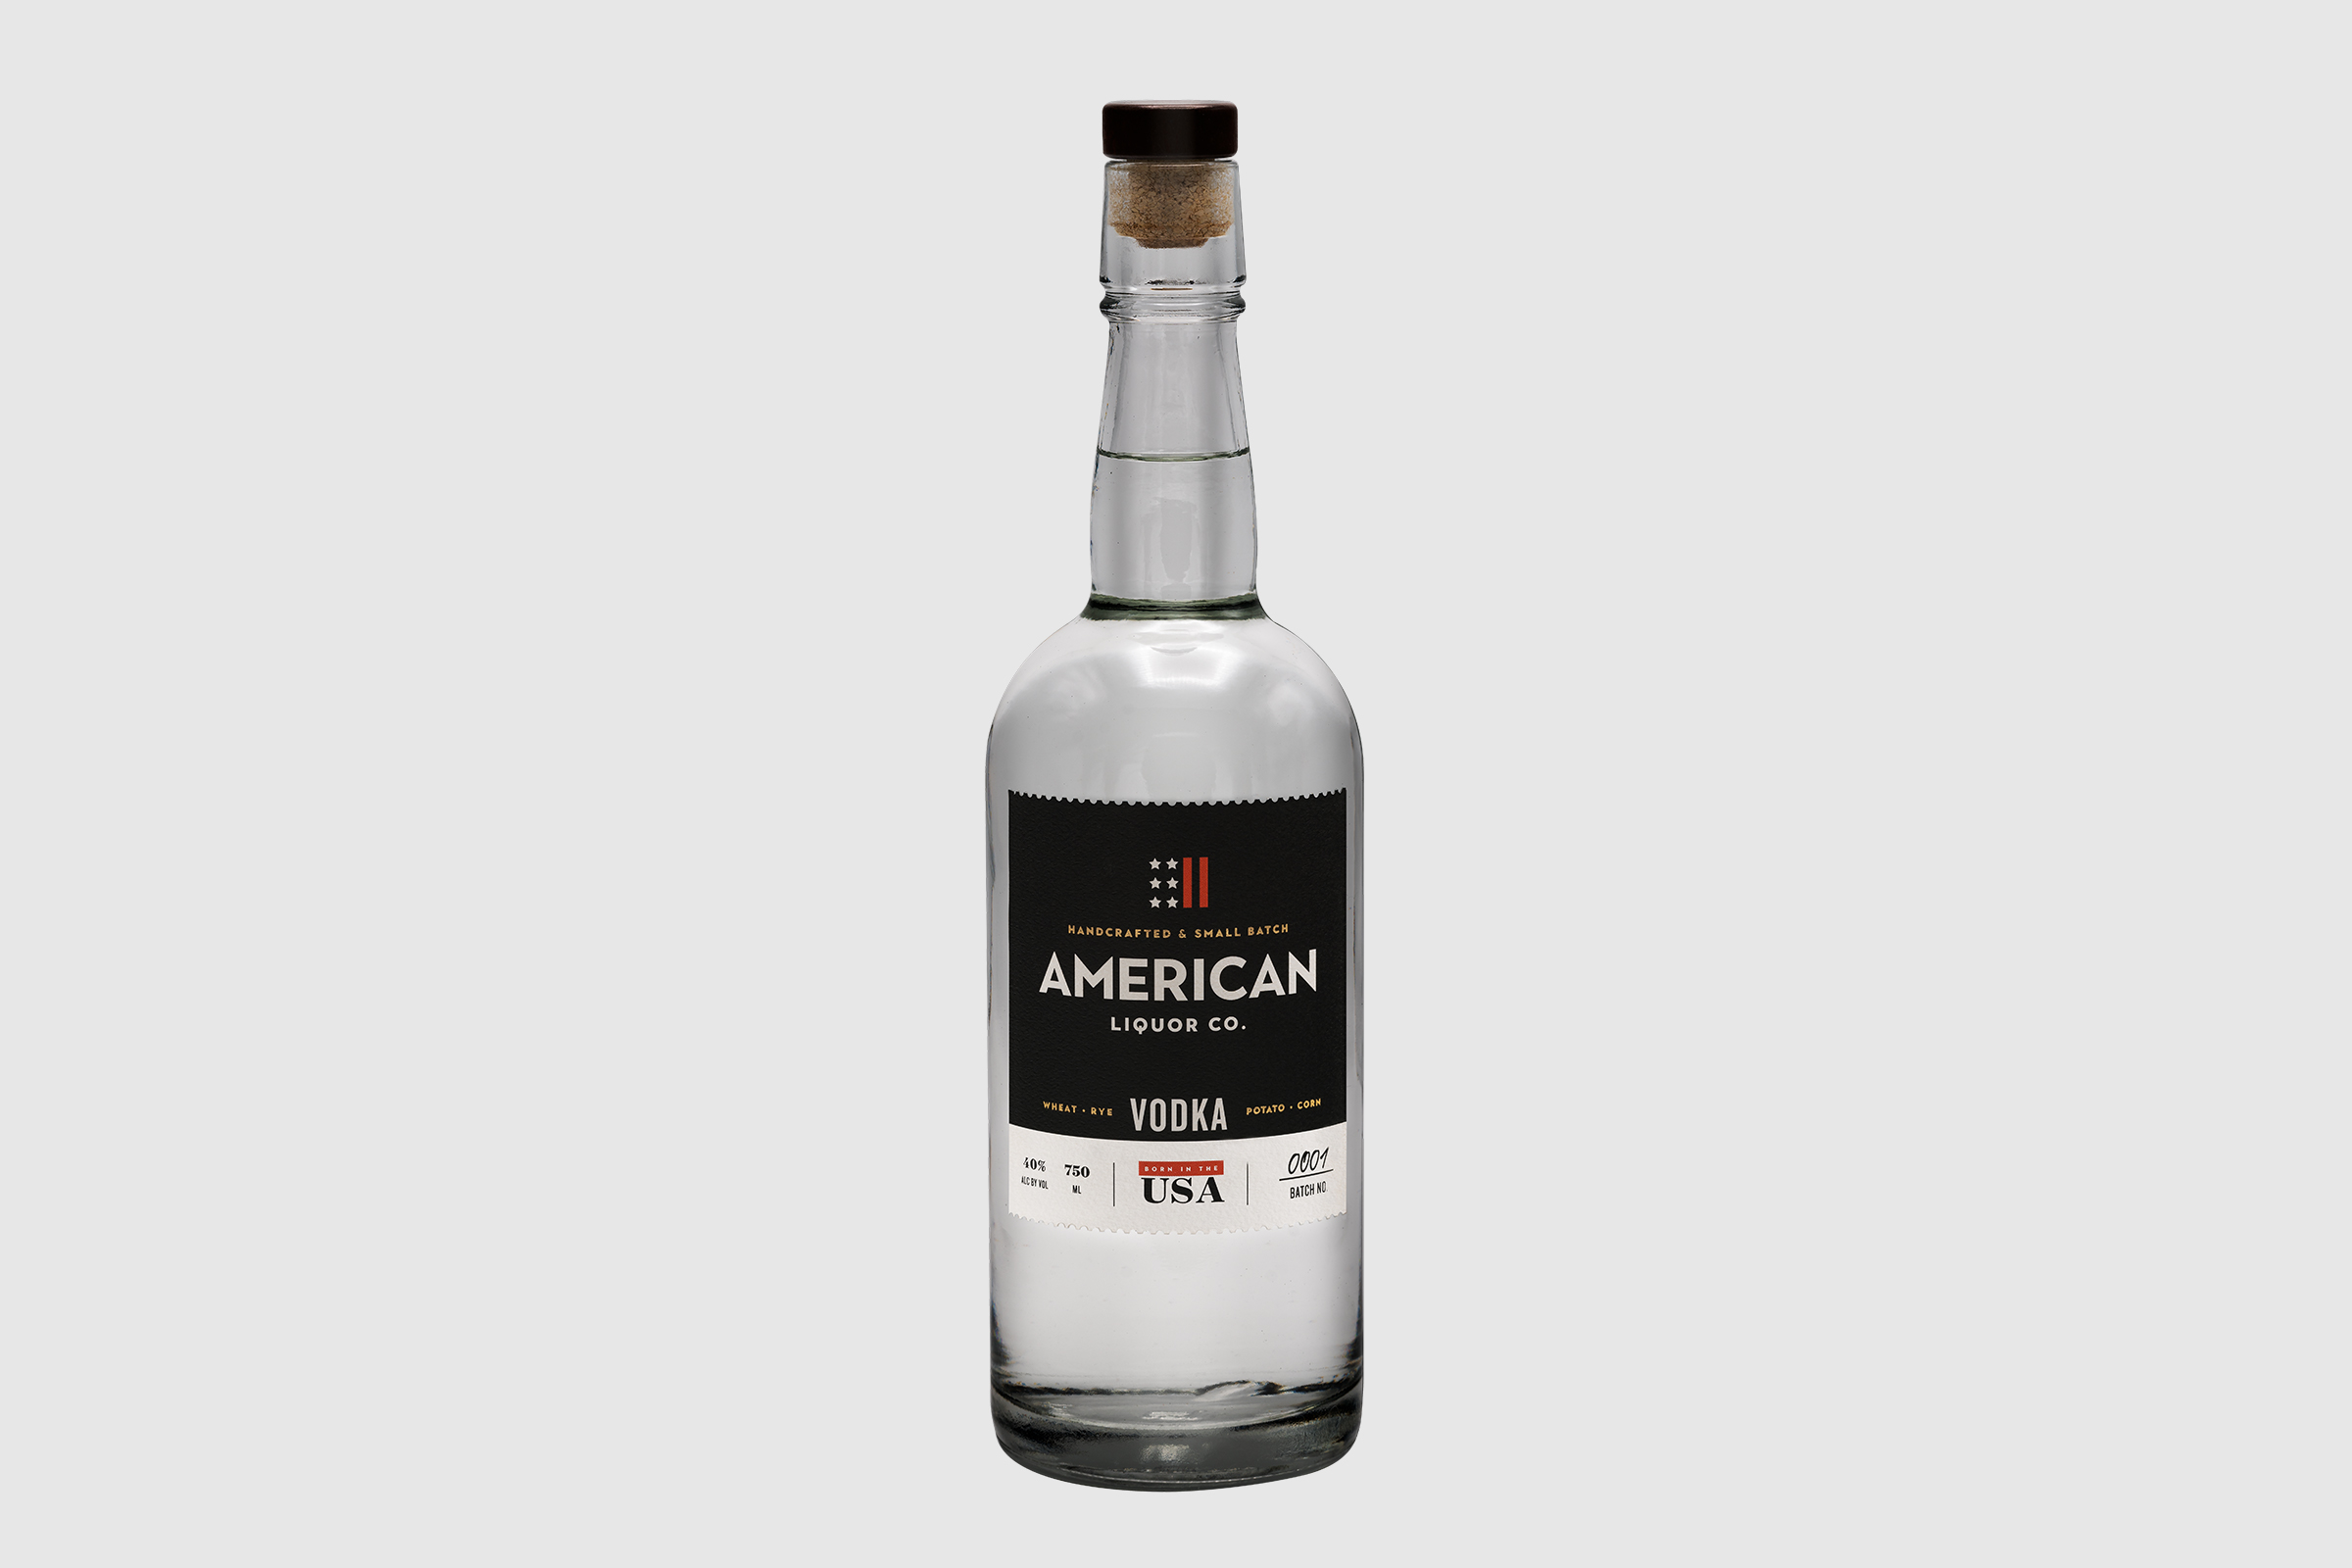 A bottle of American Liquor Co vodka.